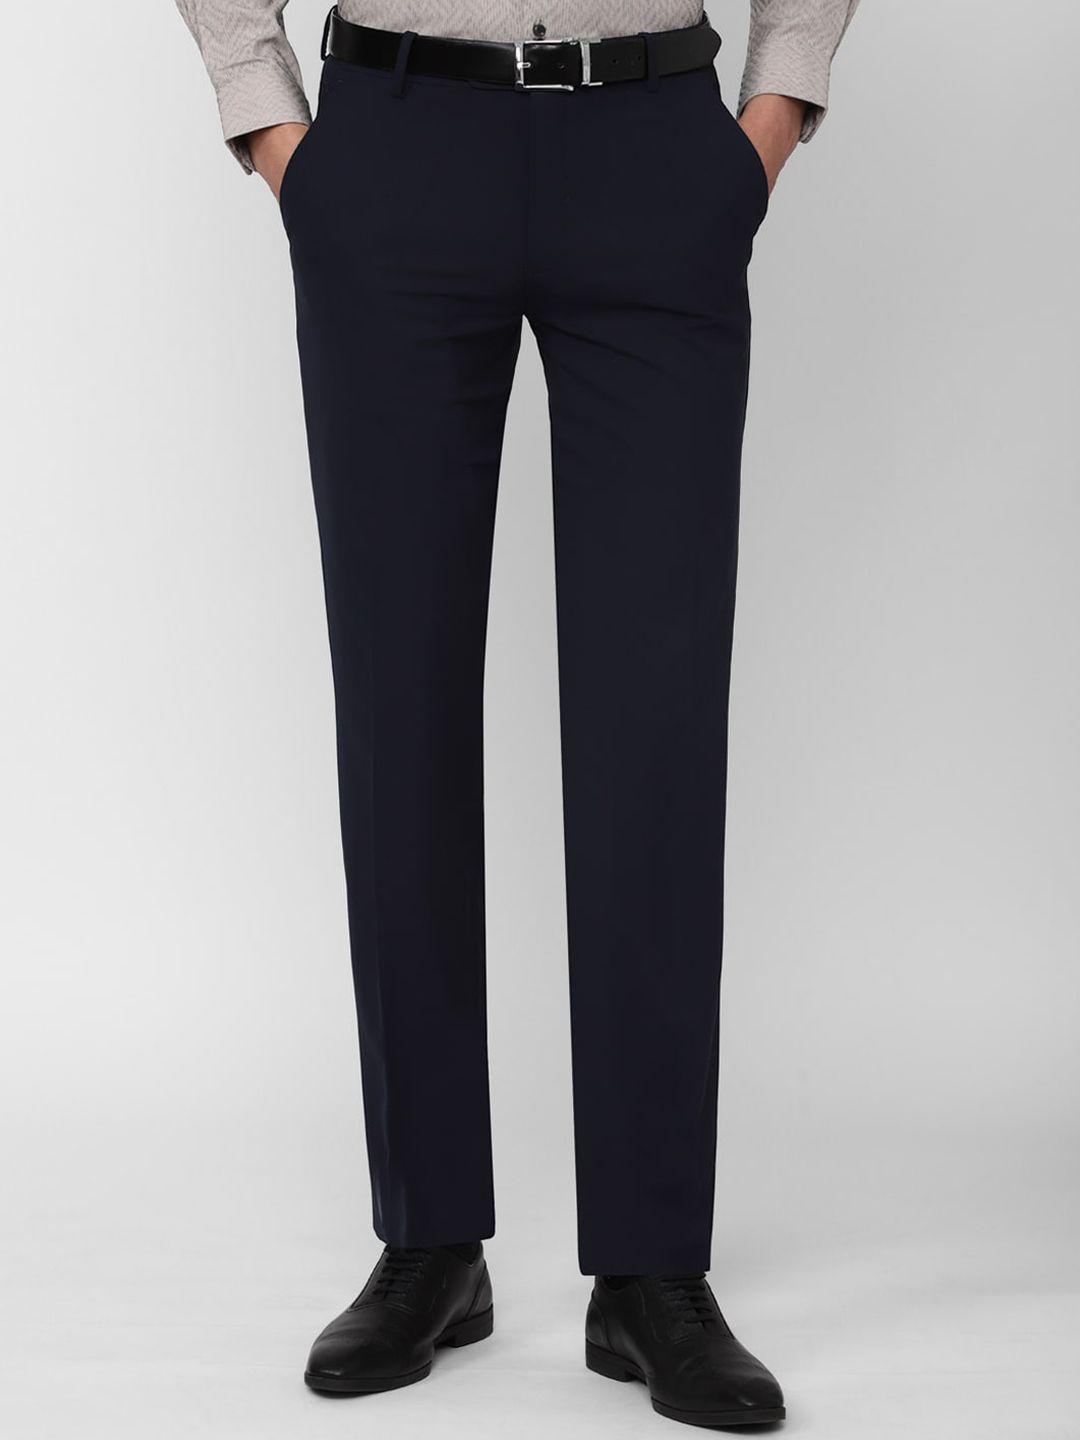 peter-england-men-navy-blue-slim-fit-formal-trousers